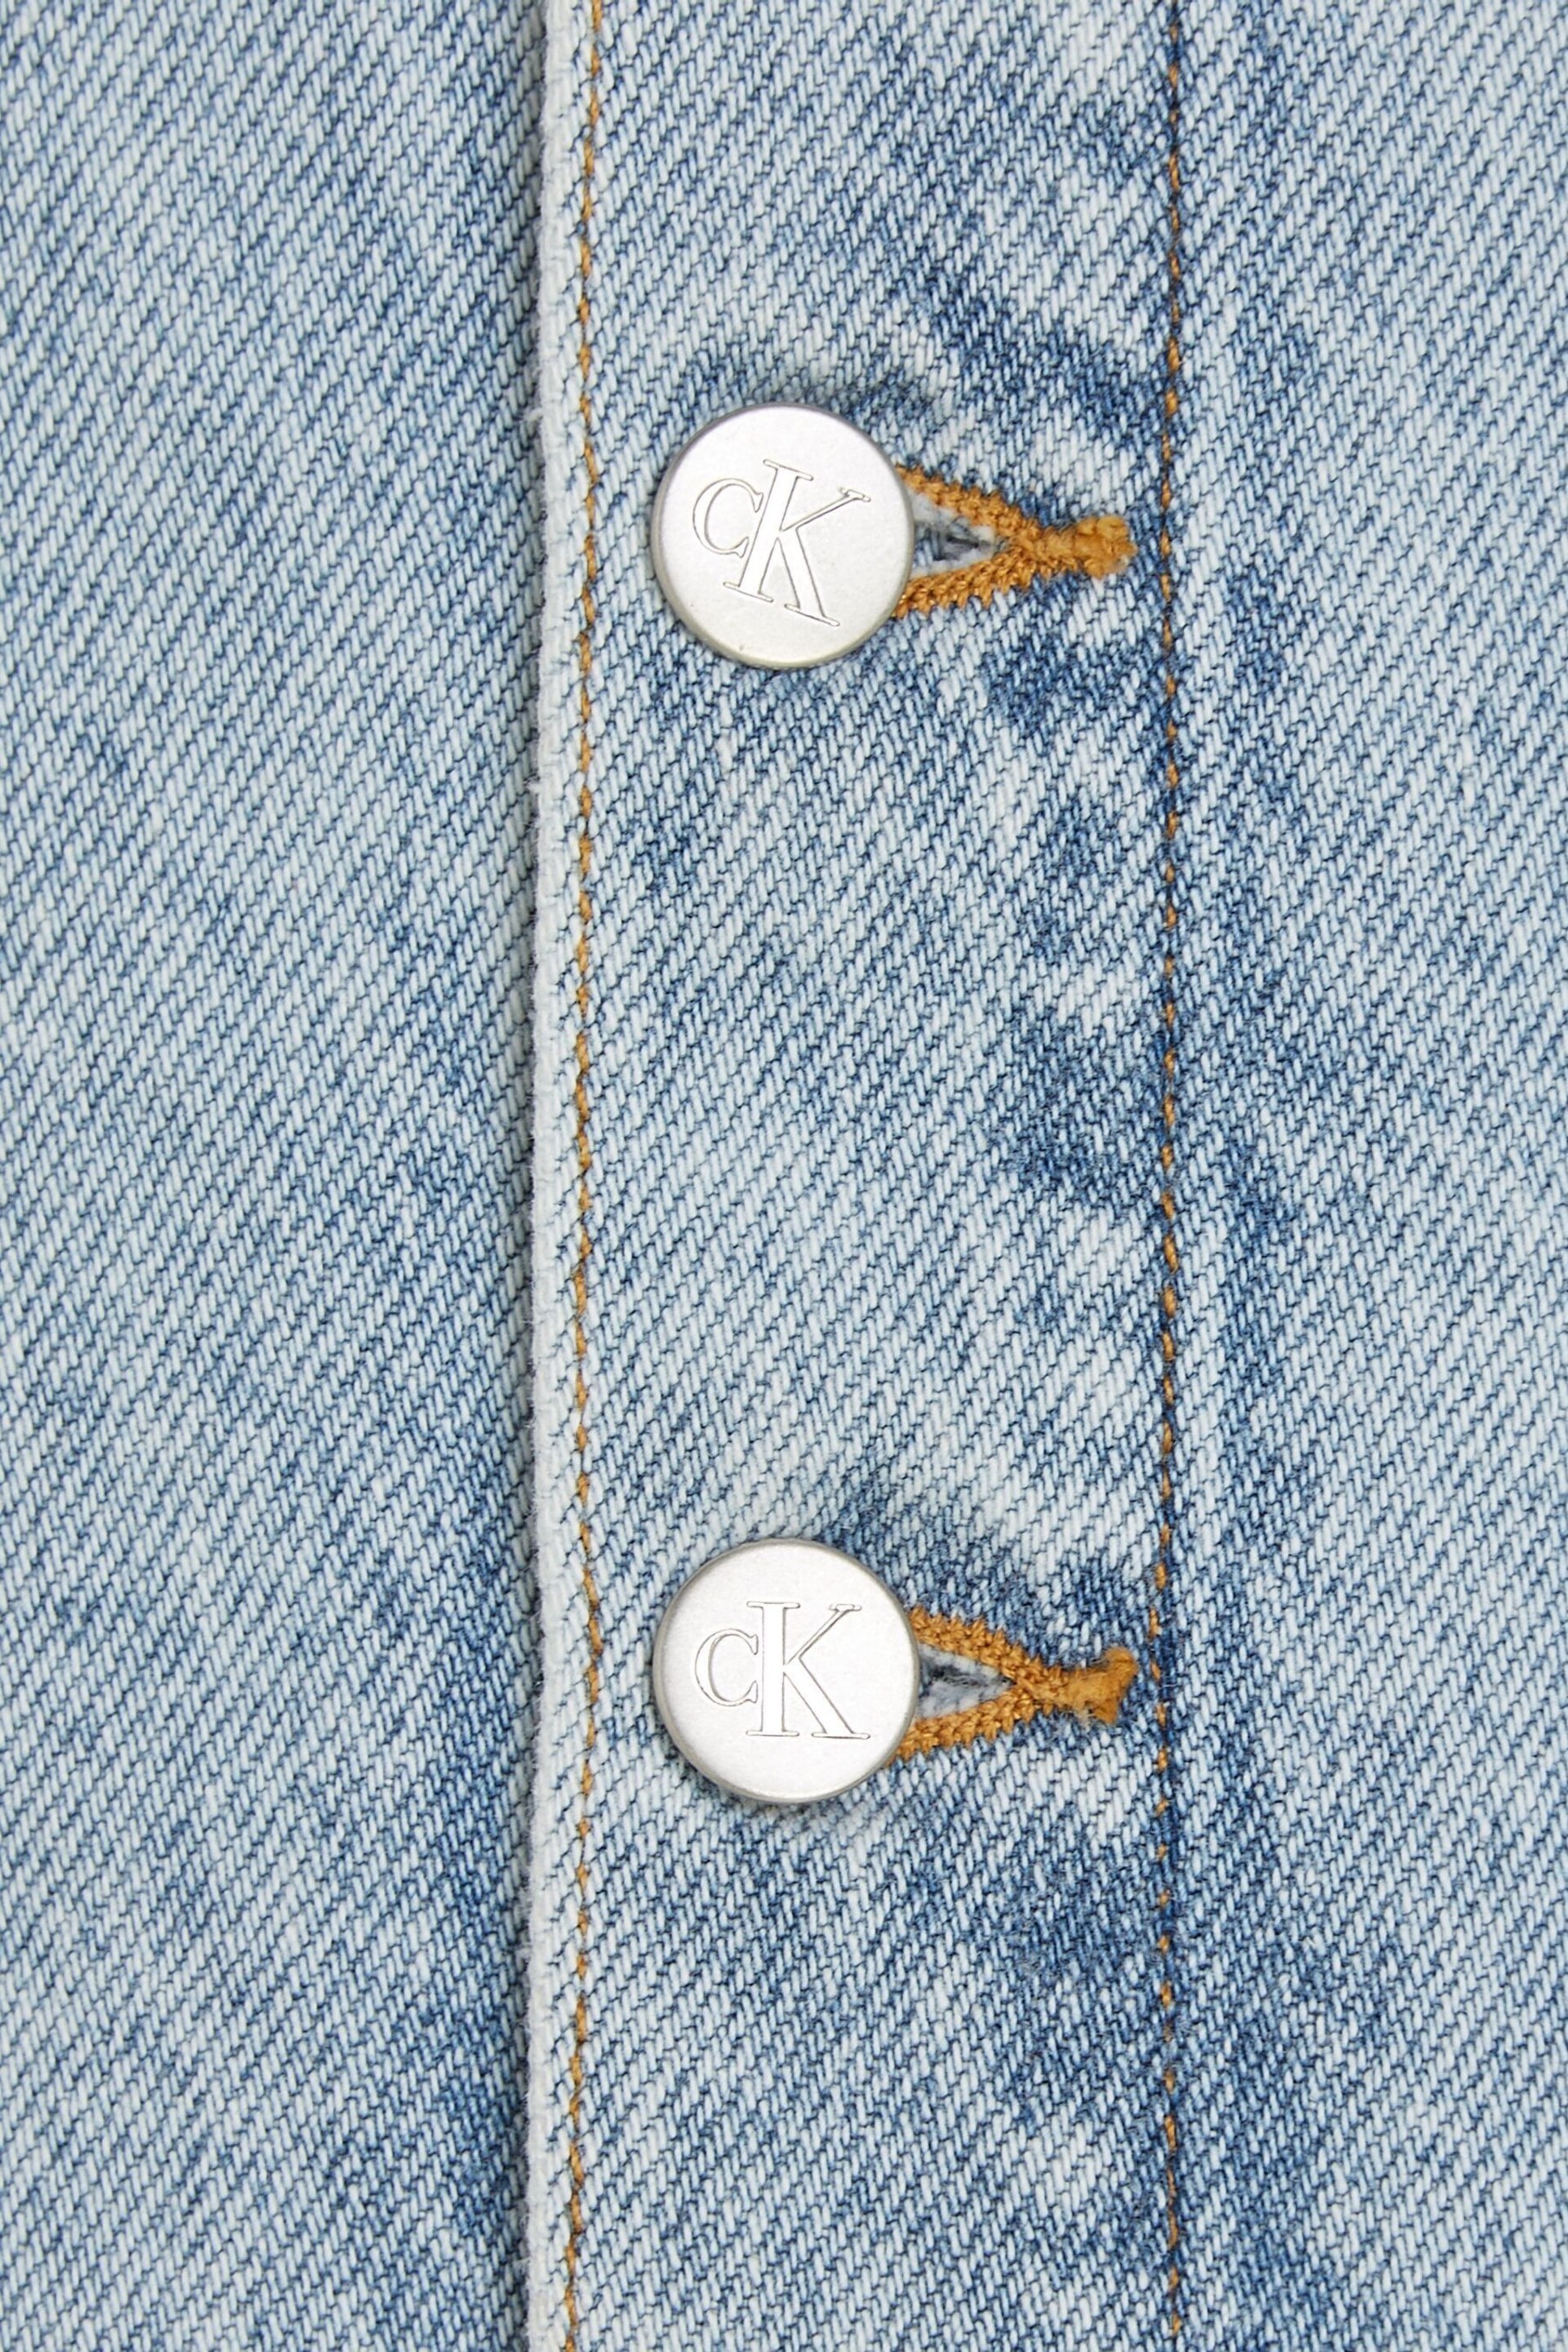 Calvin Klein Jeans Blue Strap Denim Top - Image 6 of 6